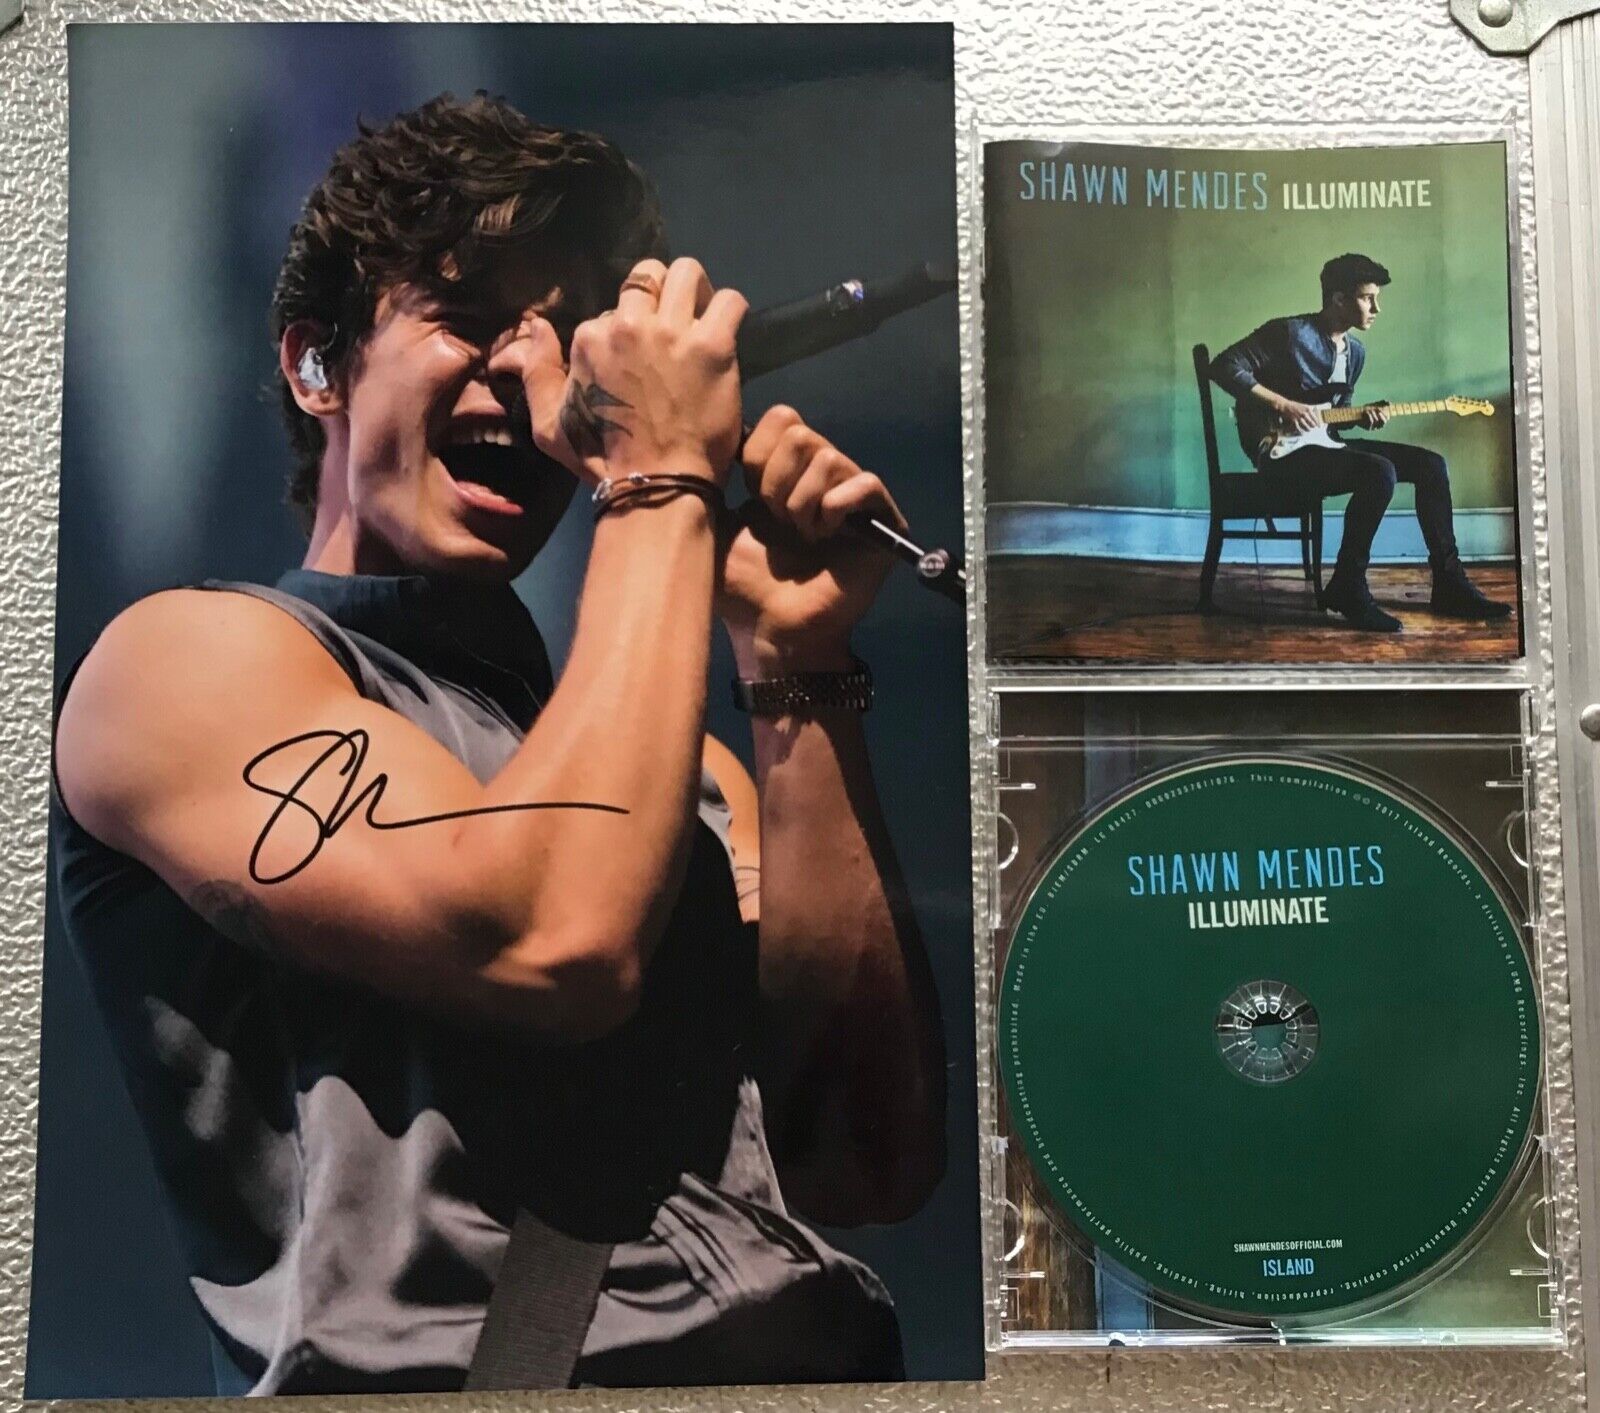 SHAWN MENDES,ILLUMINATE 2017 CD,+ 12” x 8”  GENUINE HAND SIGNED PHOTO,PLUS C.O.A